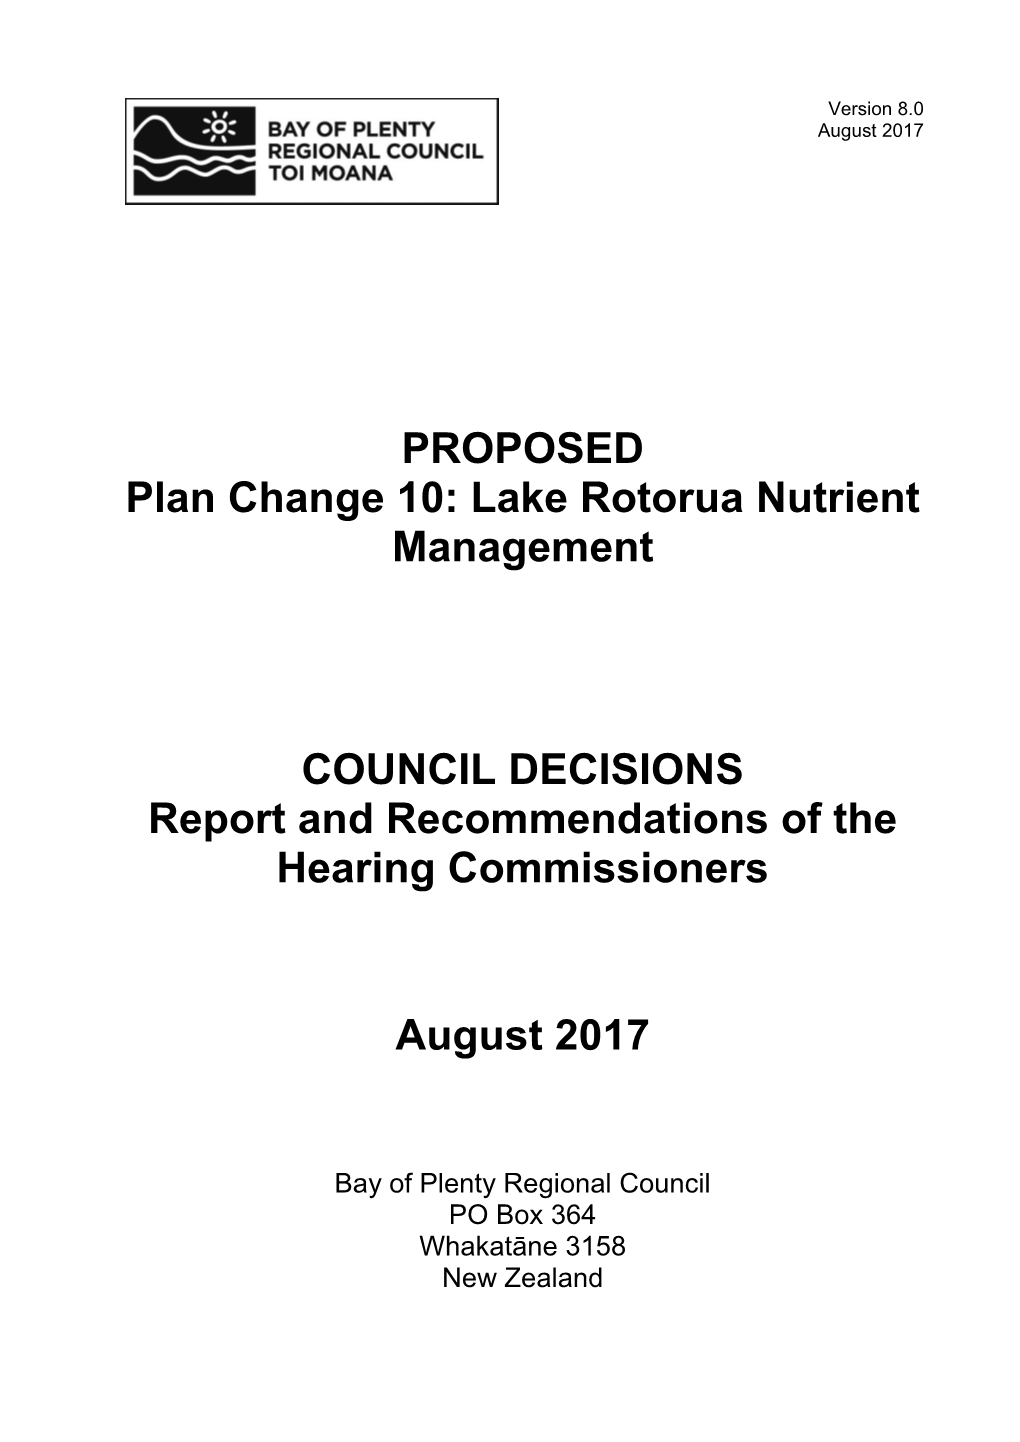 PROPOSED Plan Change 10: Lake Rotorua Nutrient Management